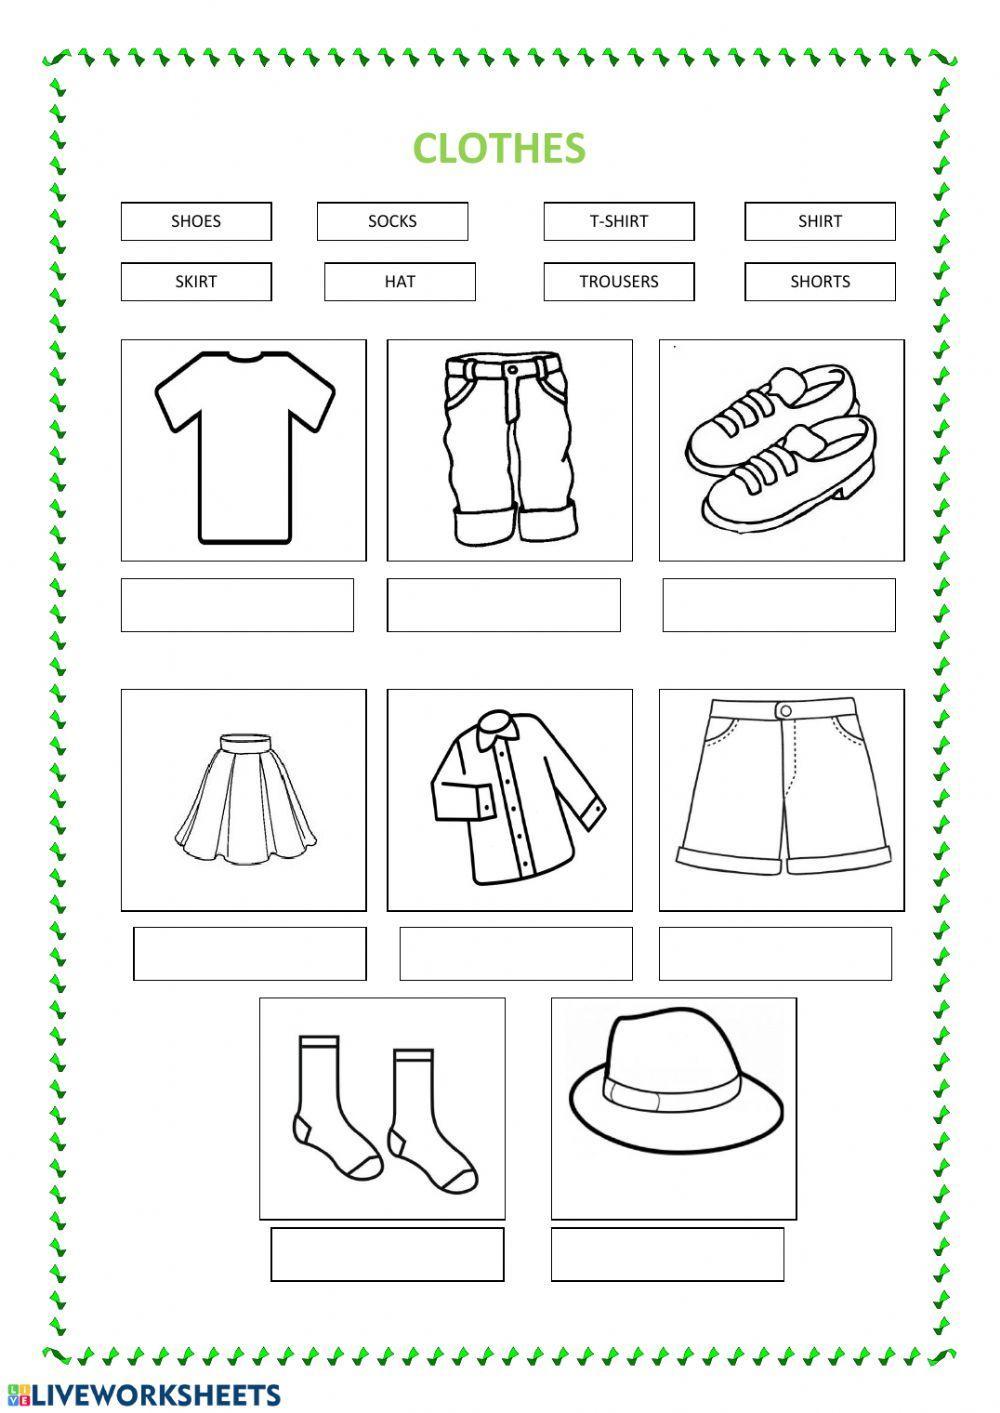 Clothes online exercise for 1º primaria | Live Worksheets